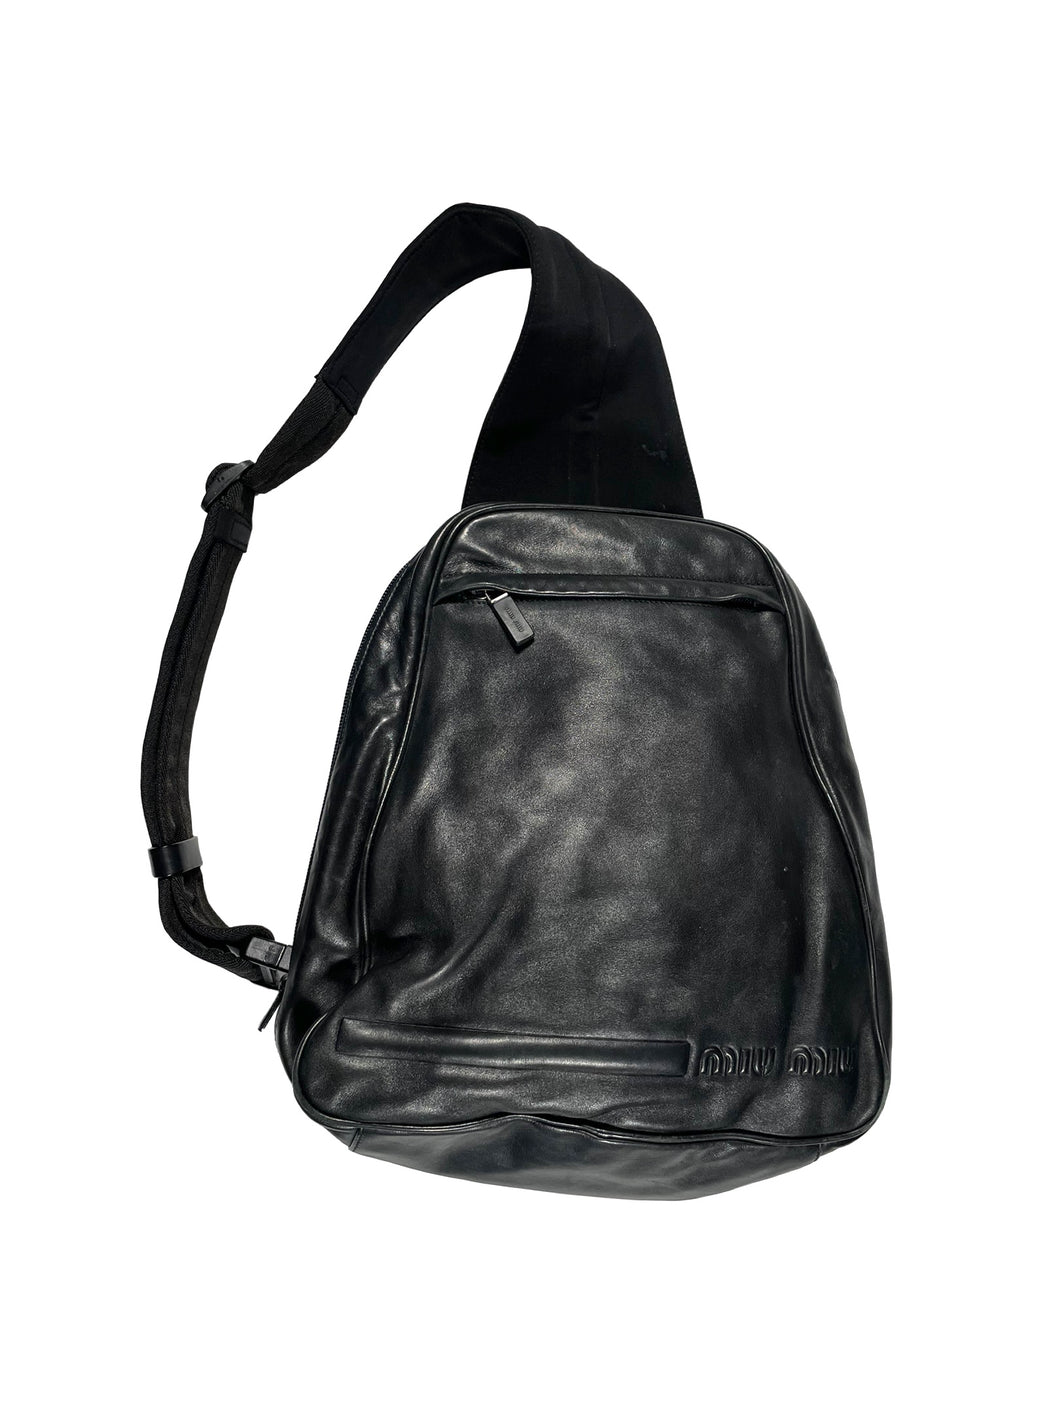 1999 Miu Miu black leather crossbody bag